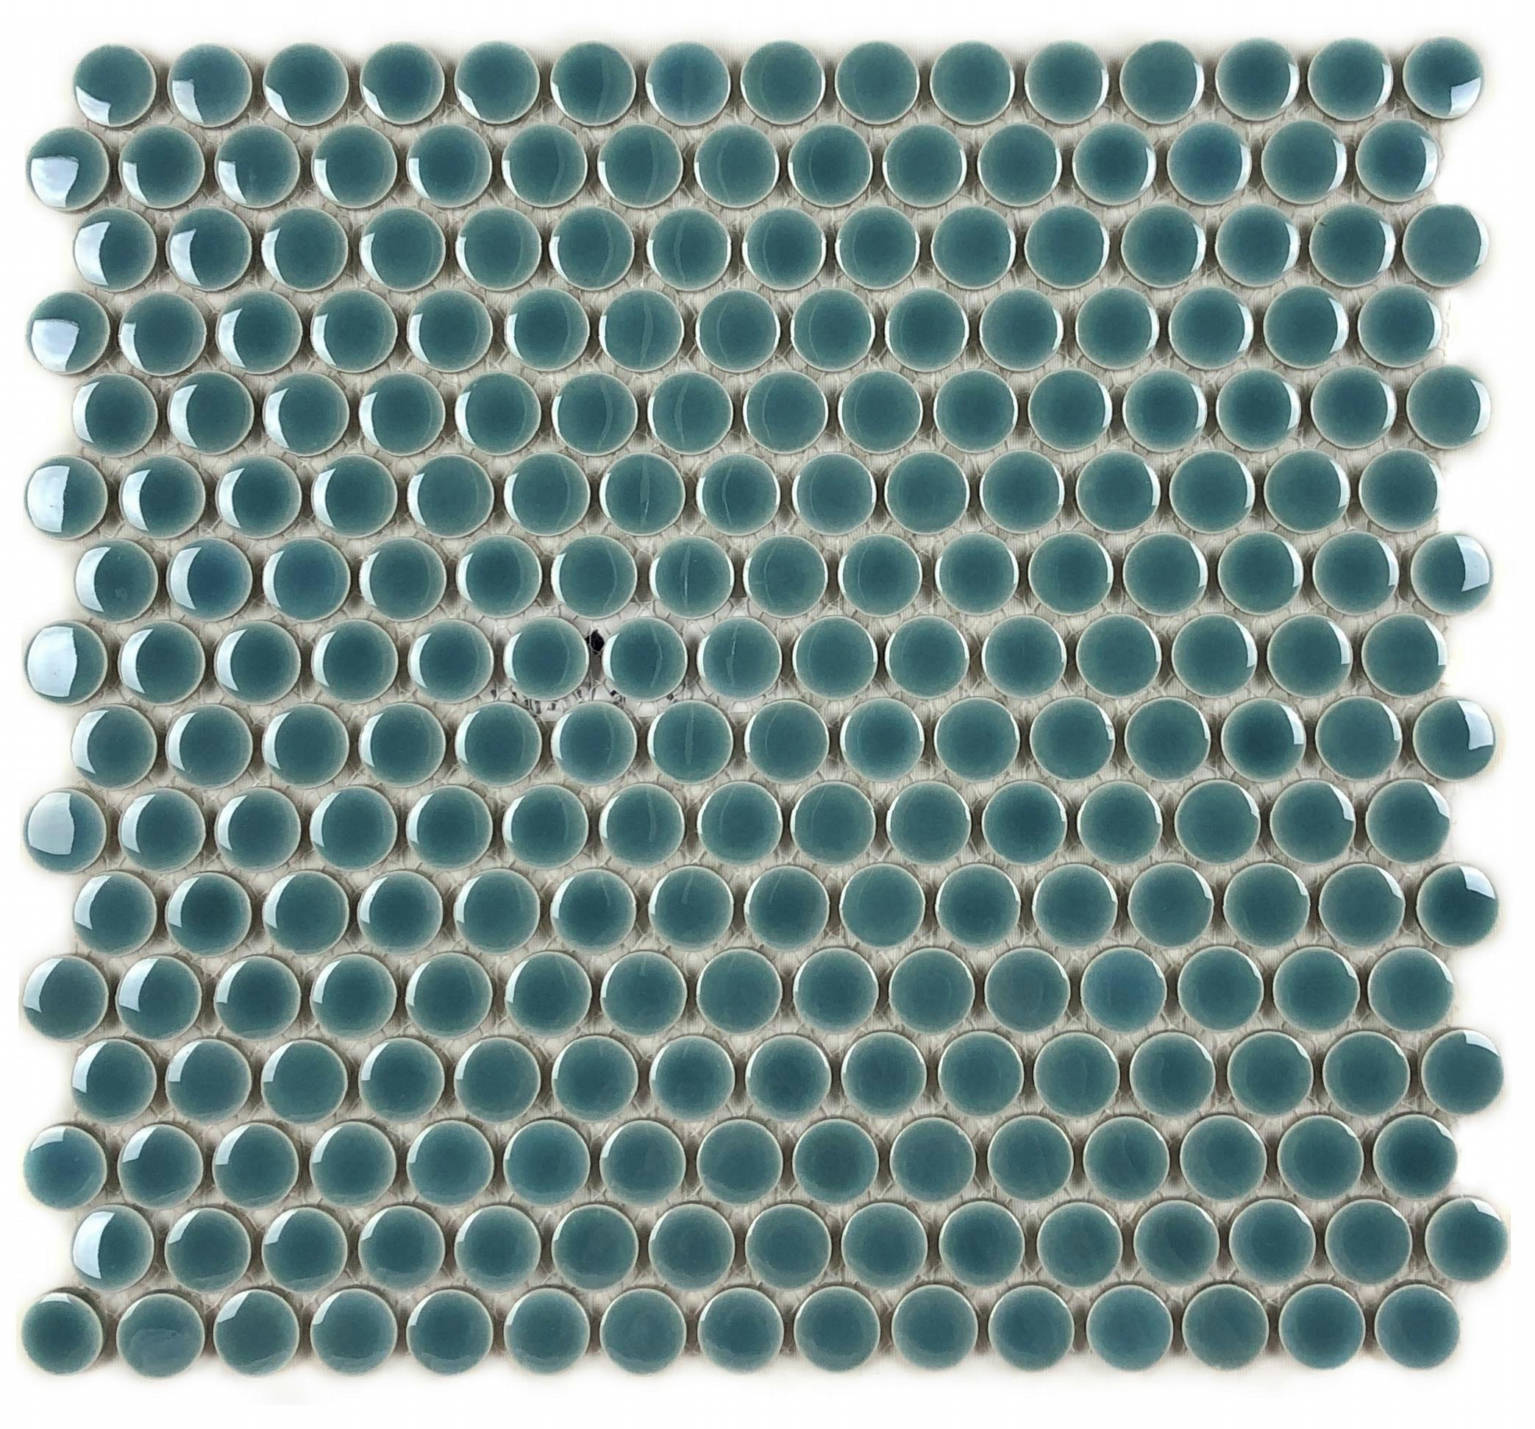 Mosaic Denim 1-Inch Penny Rounds Pattern (12"x12")